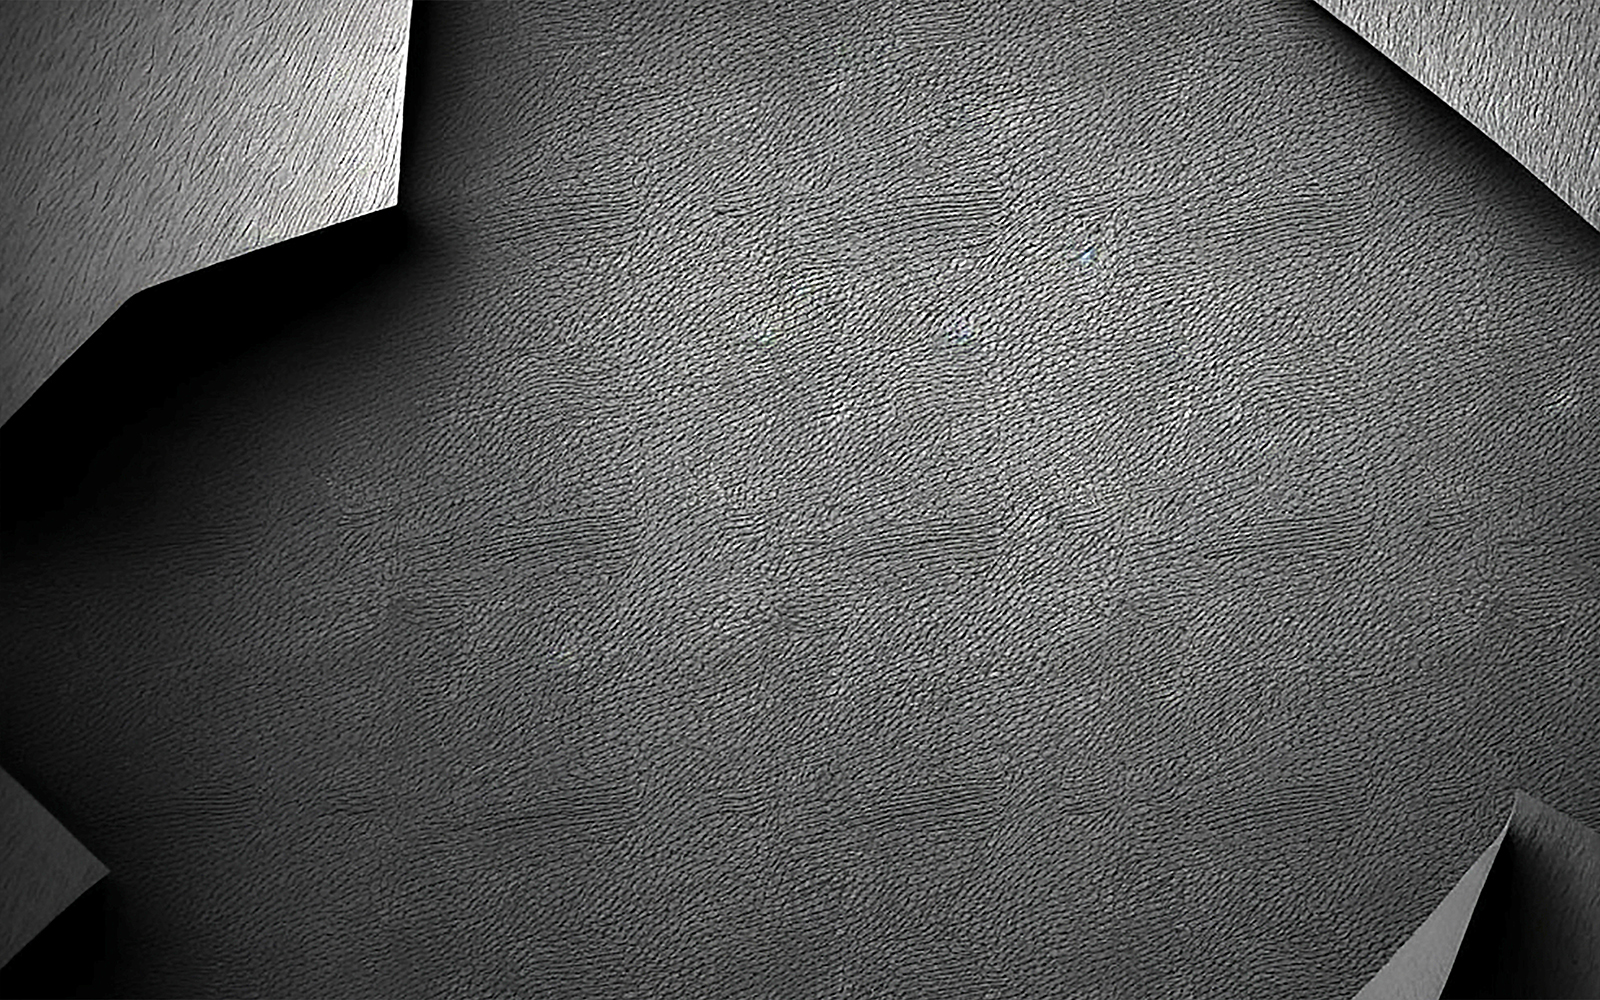 Textured wall backgroun_grey wall pattern background_ grey stone wall pattern background